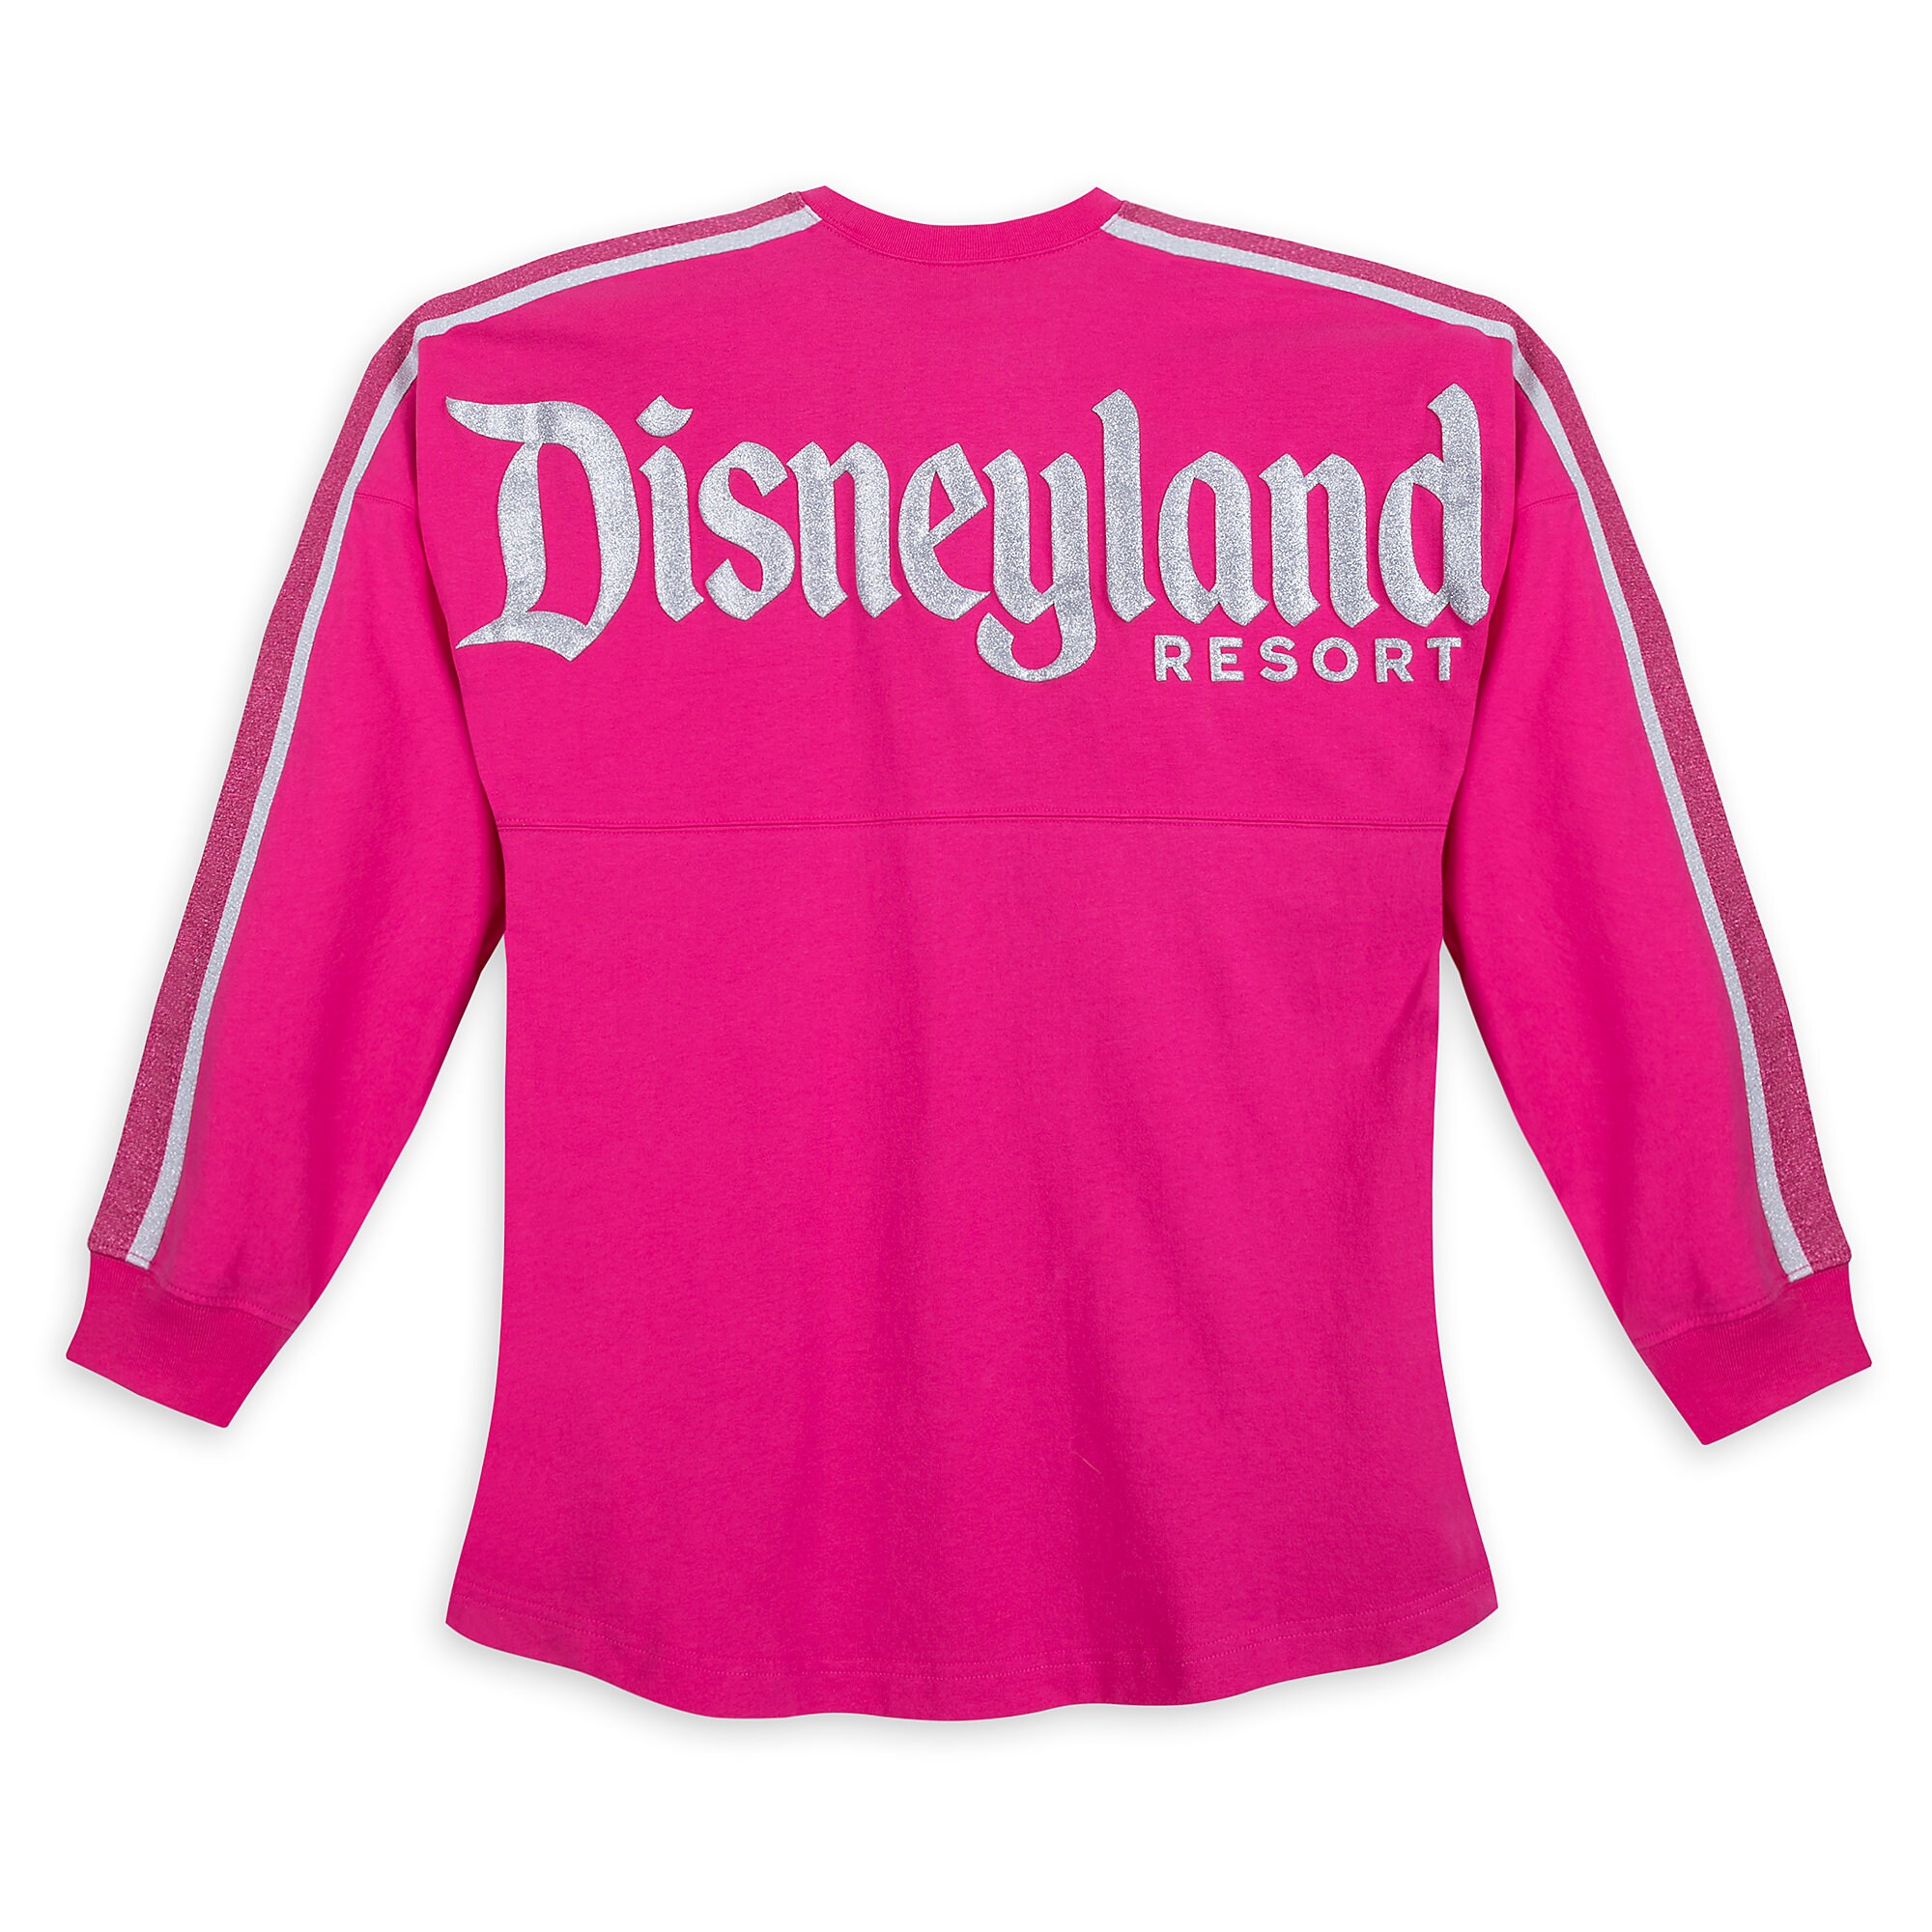 Disneyland Spirit Jersey for Adults - Imagination Pink